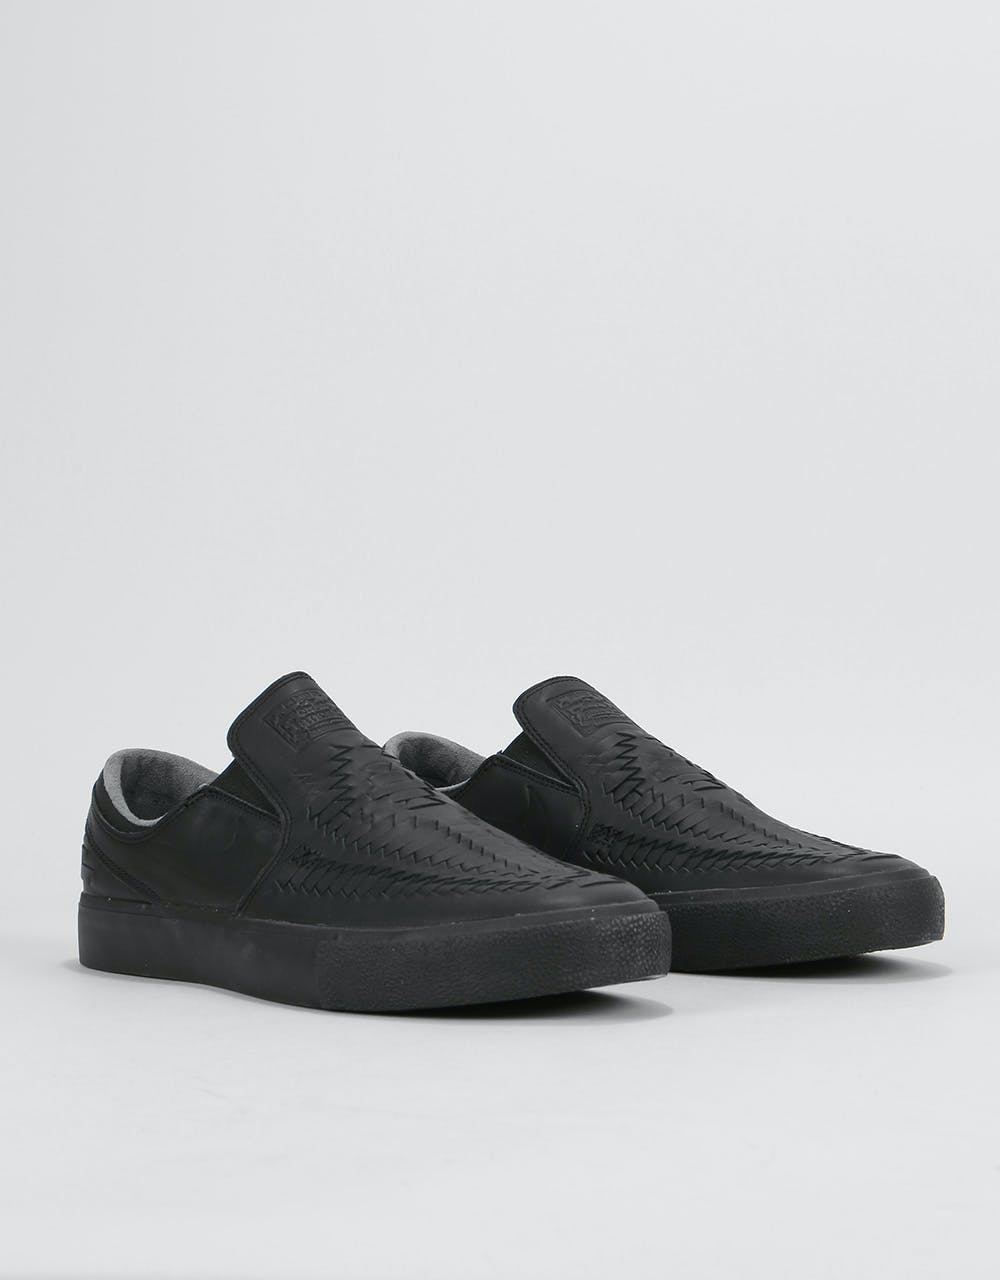 Nike SB Zoom Janoski Slip RM Crafted Skate Shoes - Black/Black-Black